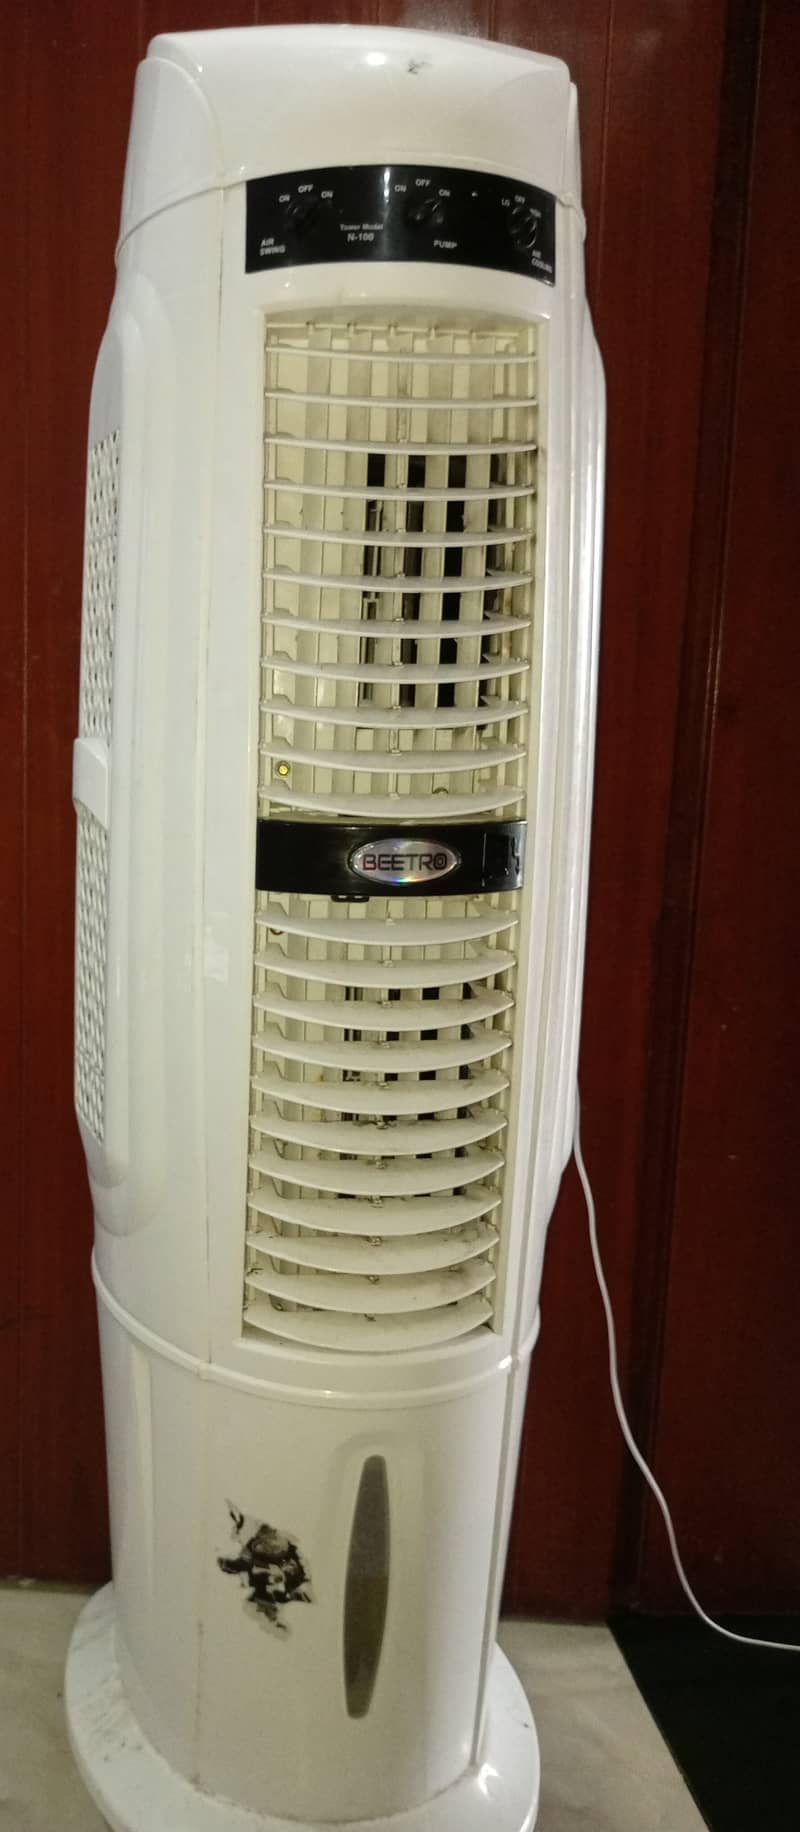 Beetro room air cooler N-100 tower inverter 5